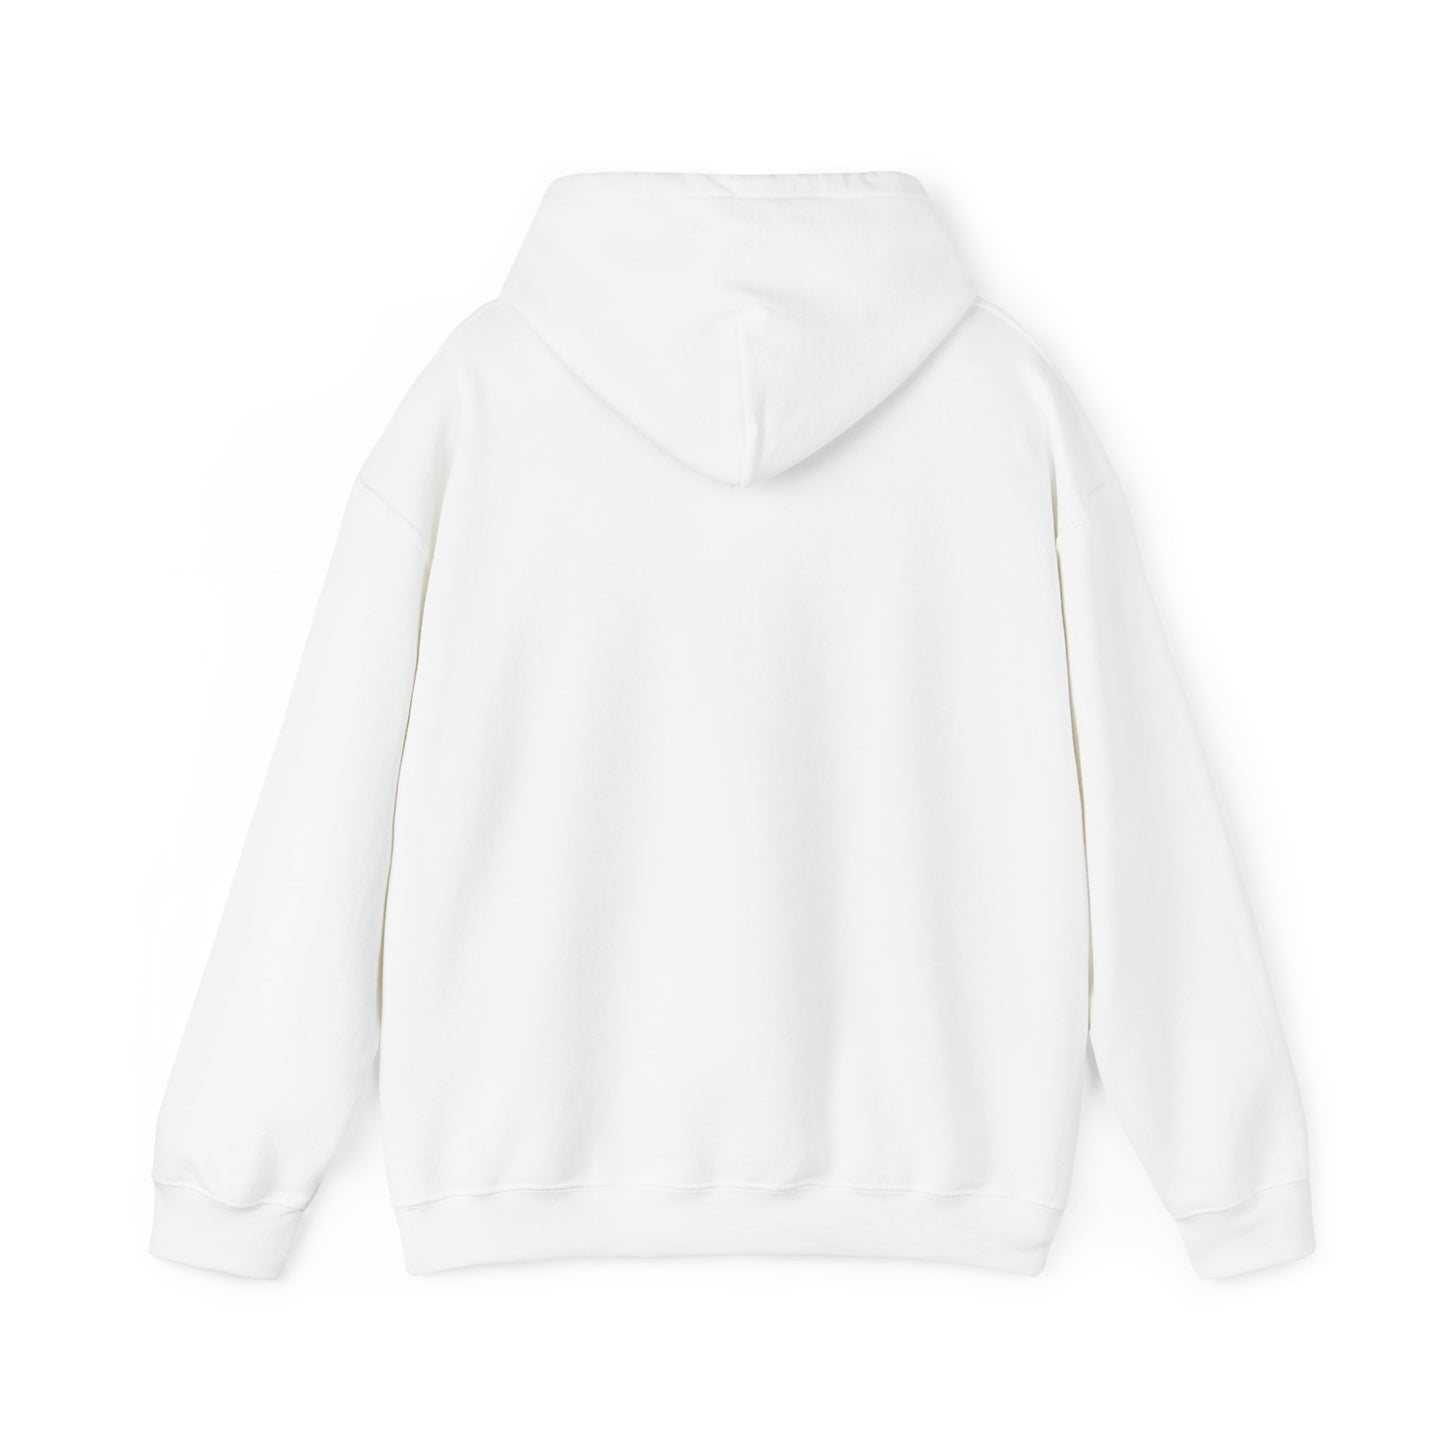 "Warhol: the abstract legend" Single Print Unisex Heavy Blend™ Hooded Sweatshirt